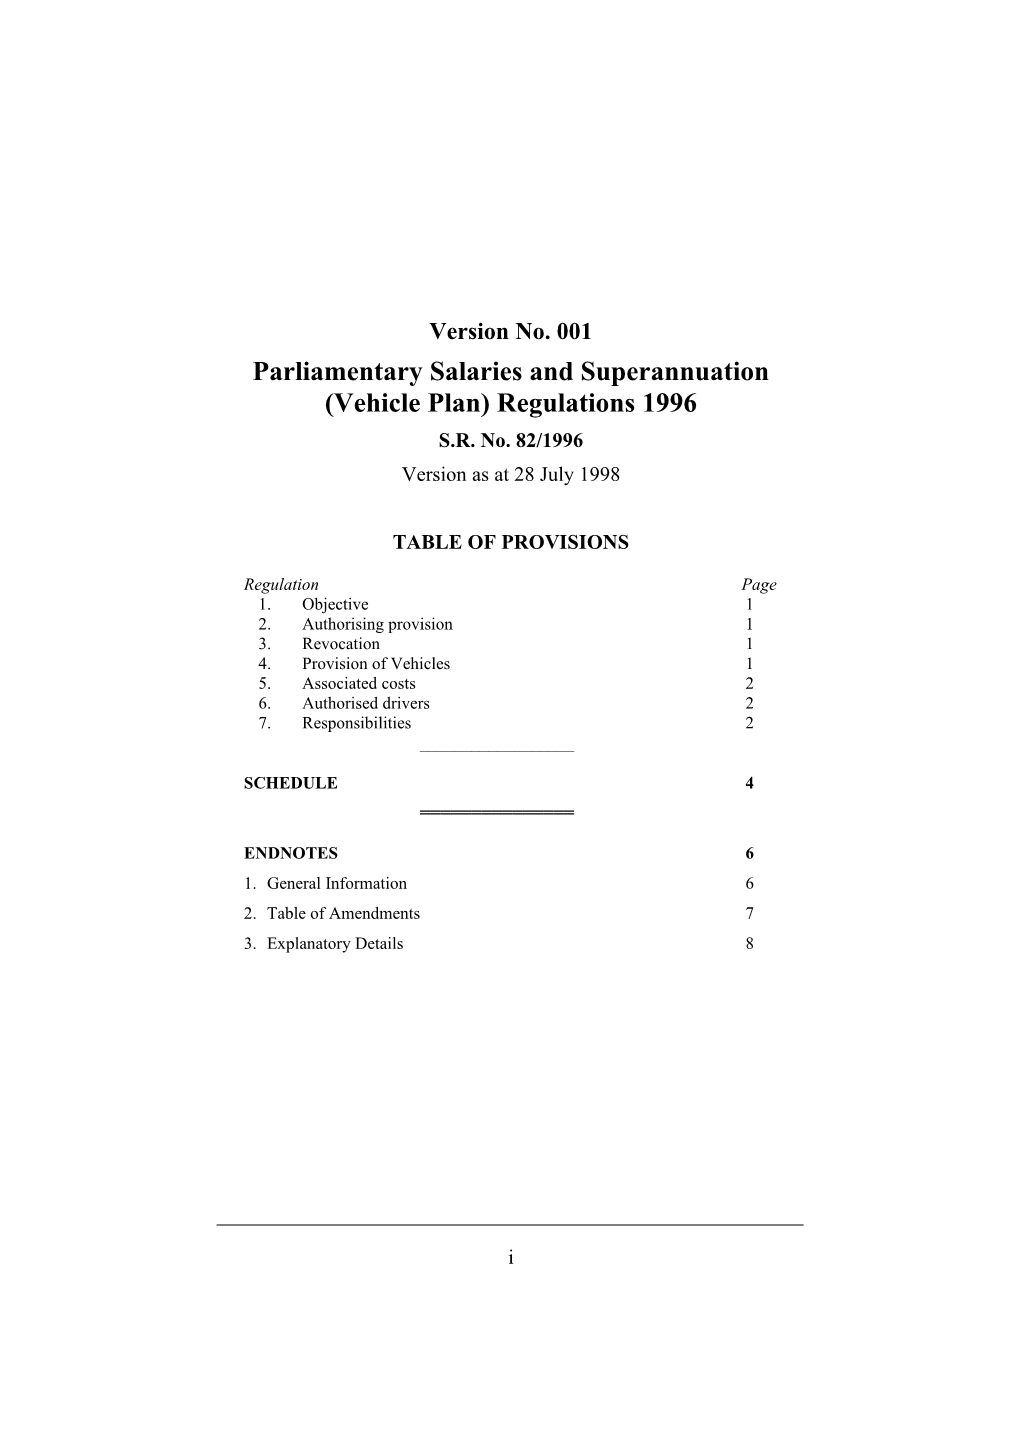 Parliamentary Salaries and Superannuation (Vehicle Plan) Regulations 1996